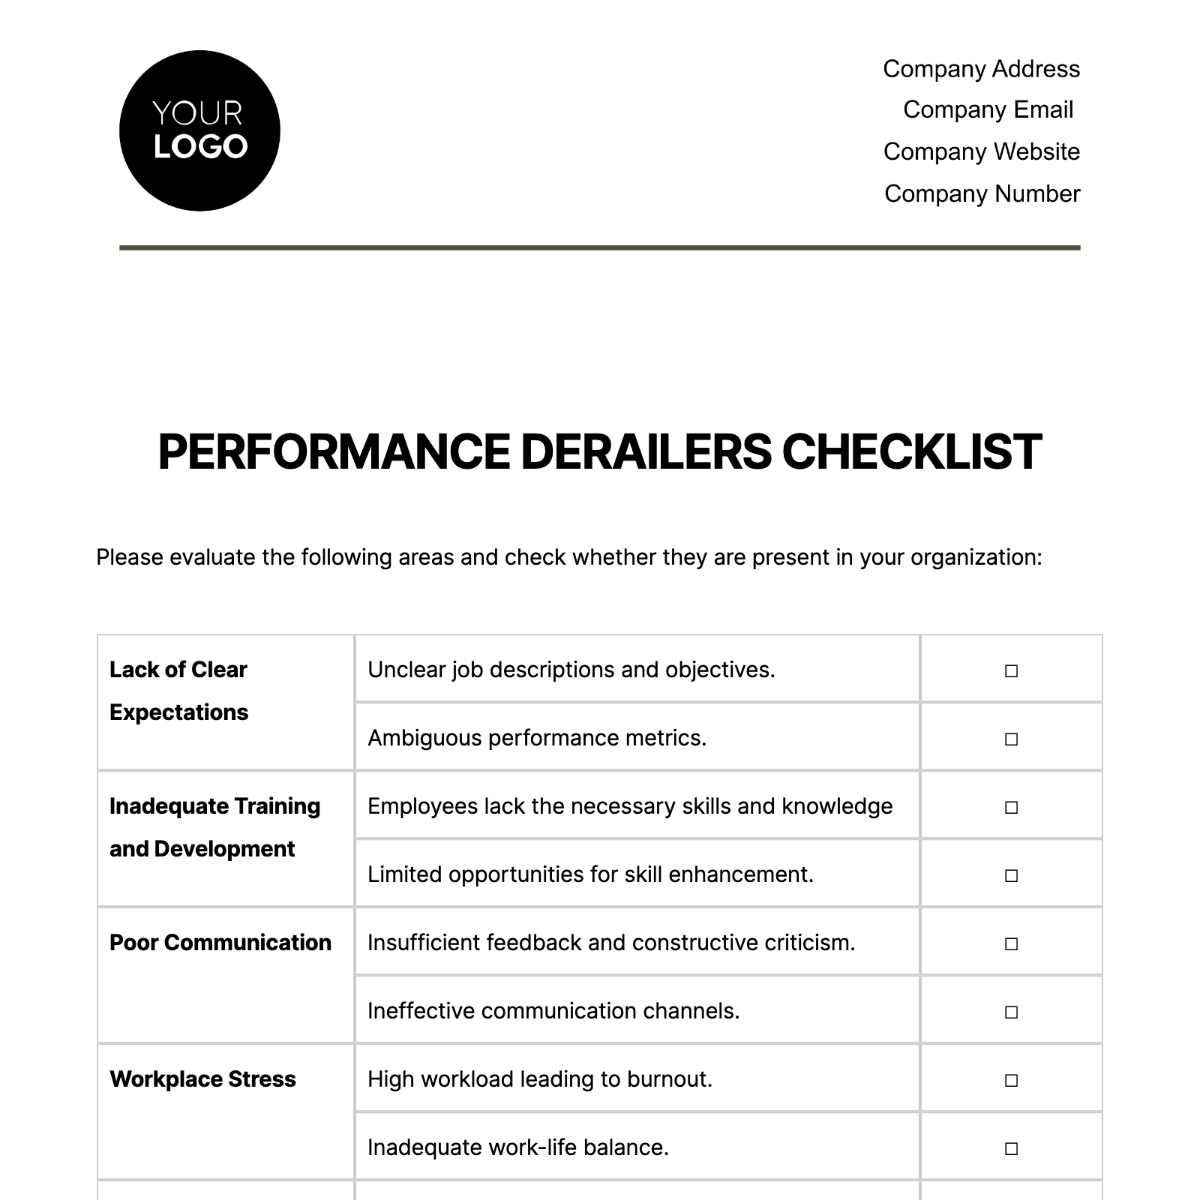 Performance Detailers Checklist HR Template